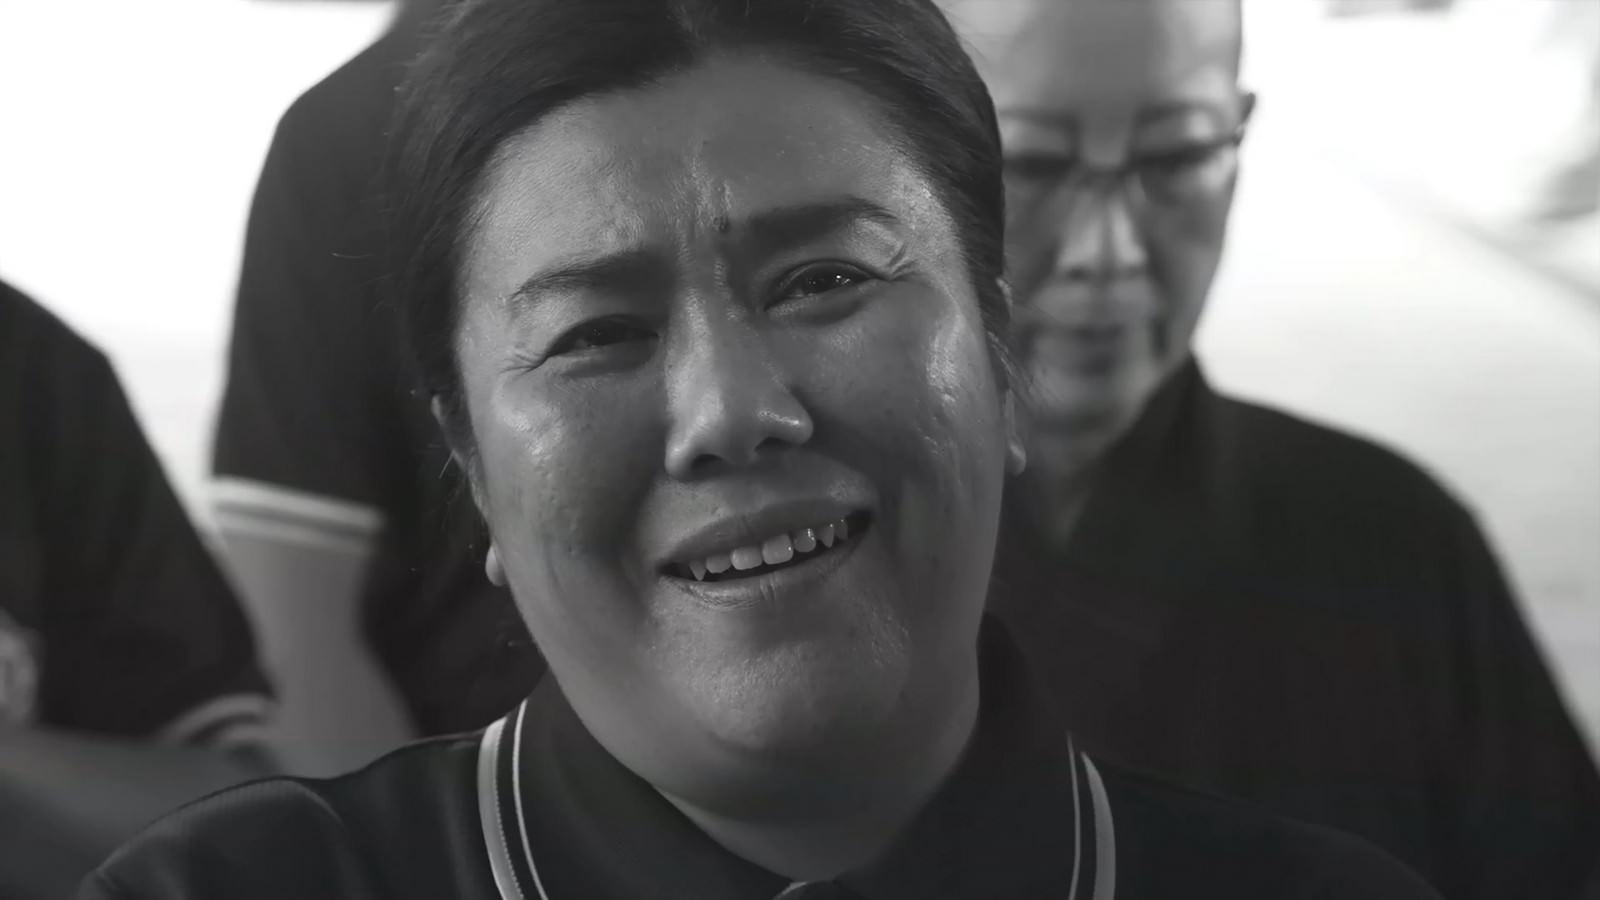 Movie, 大佛普拉斯(台灣, 2017年) / The Great Buddha+(英文), 電影劇照, 角色與演員介紹